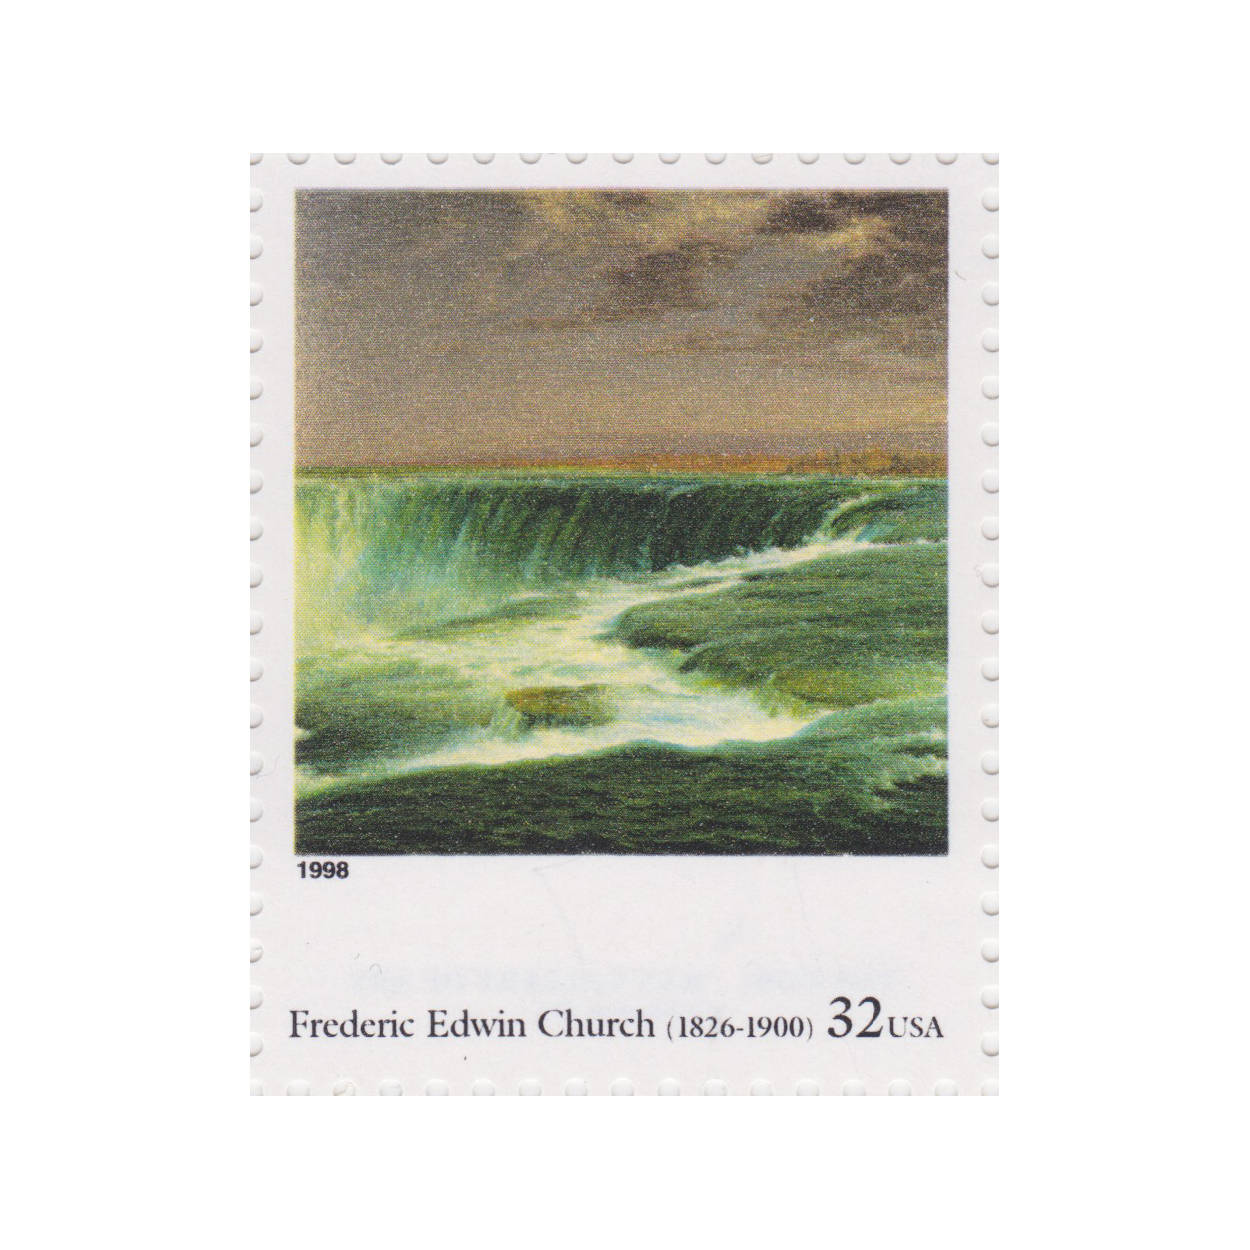 Unused US Postage Stamp American Gothic Grant Wood 3236q Item No 1998 32c Four Centuries of American Art Series